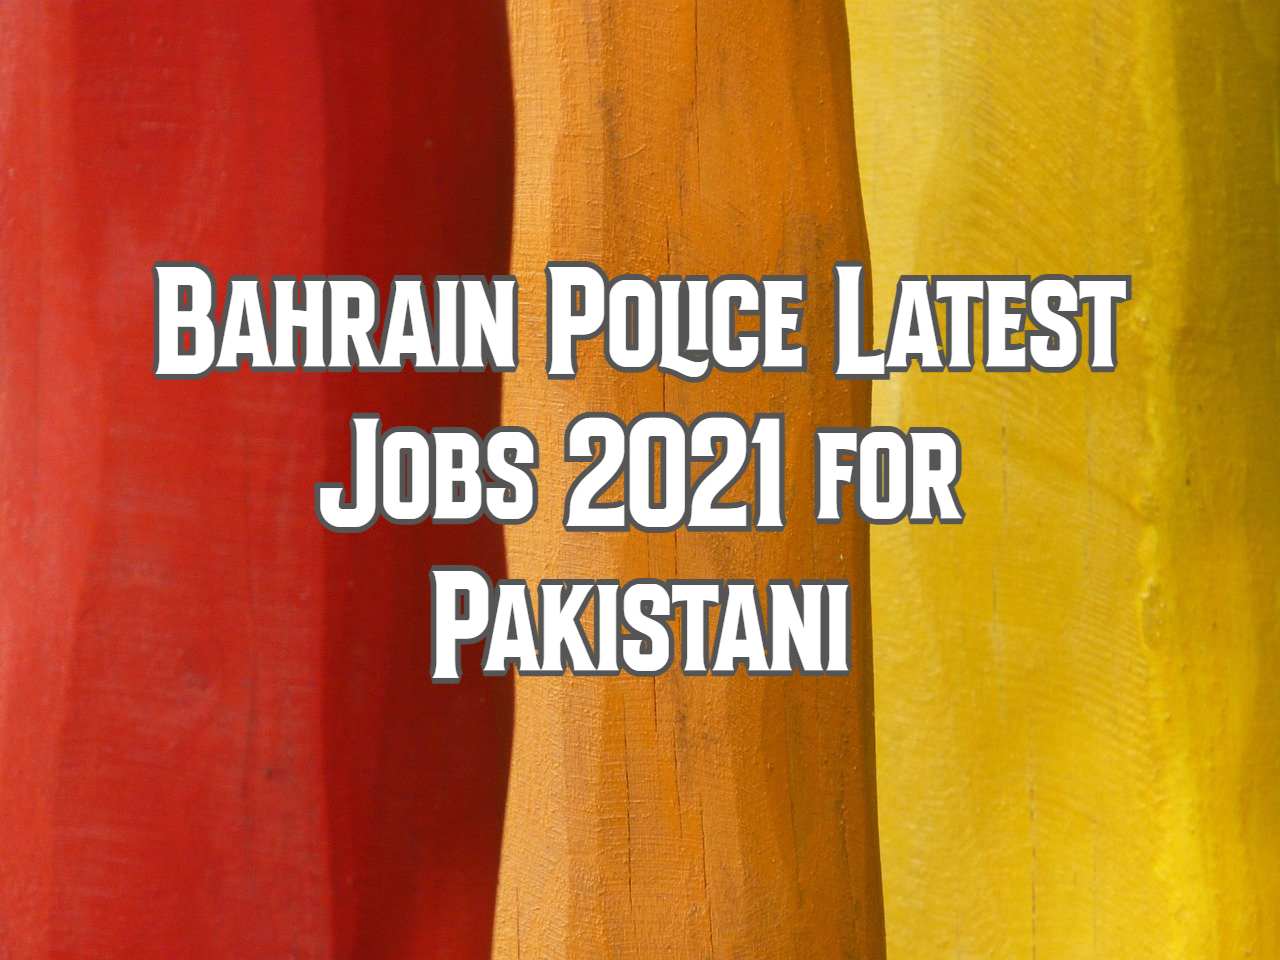 Bahrain Police Latest Jobs 2021 for Pakistani